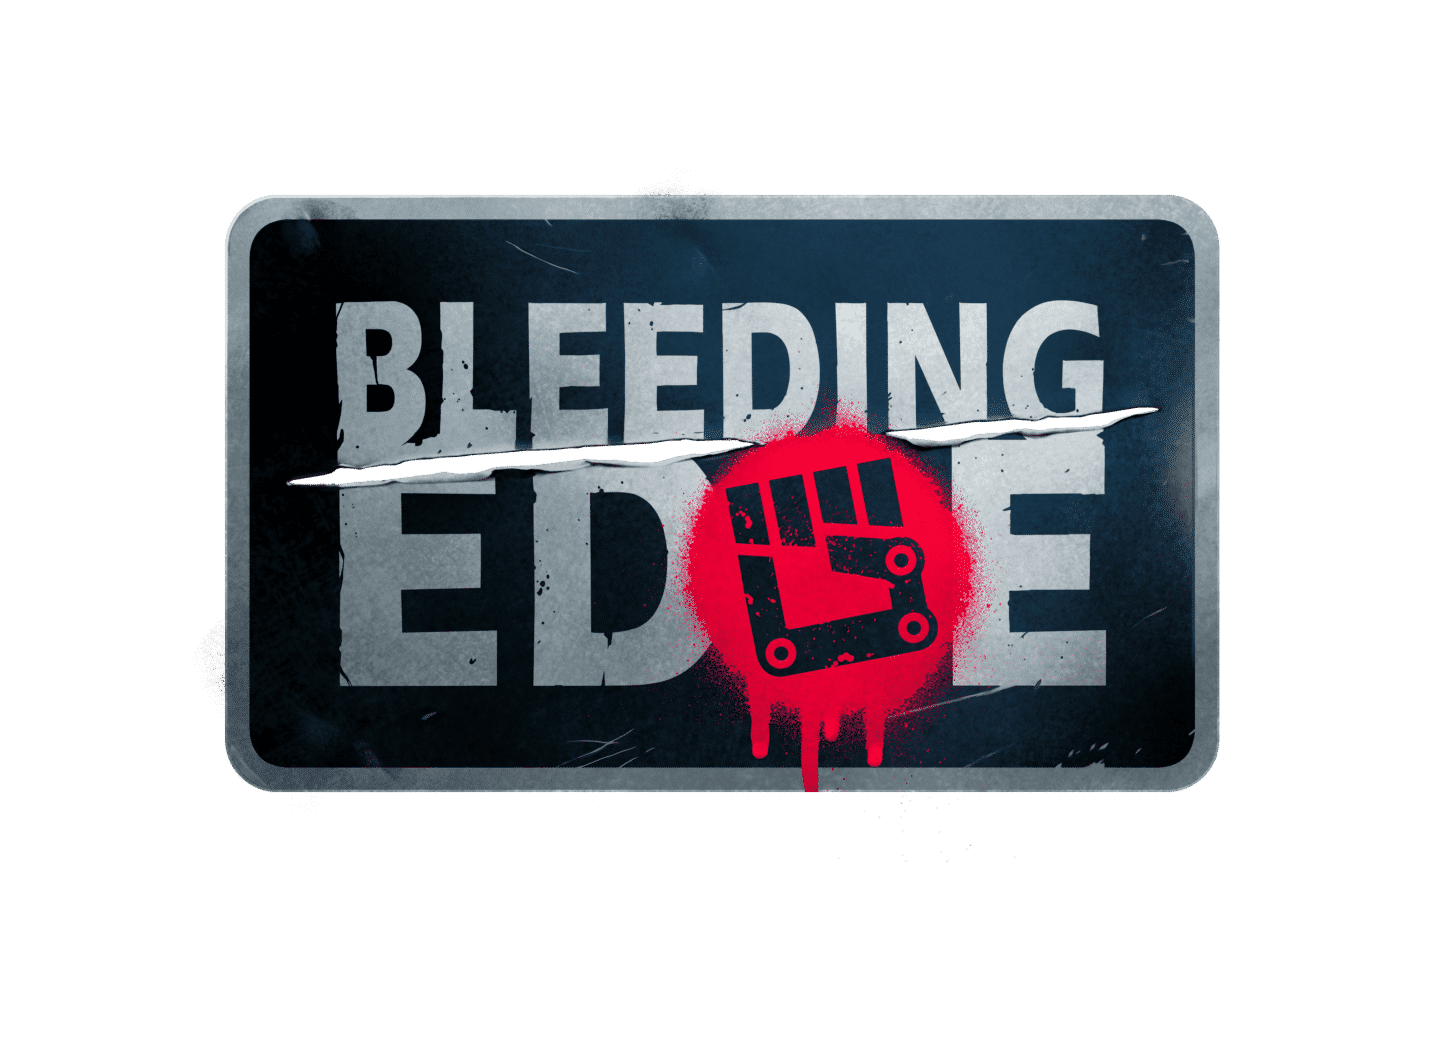 Bleeding Edge Logo